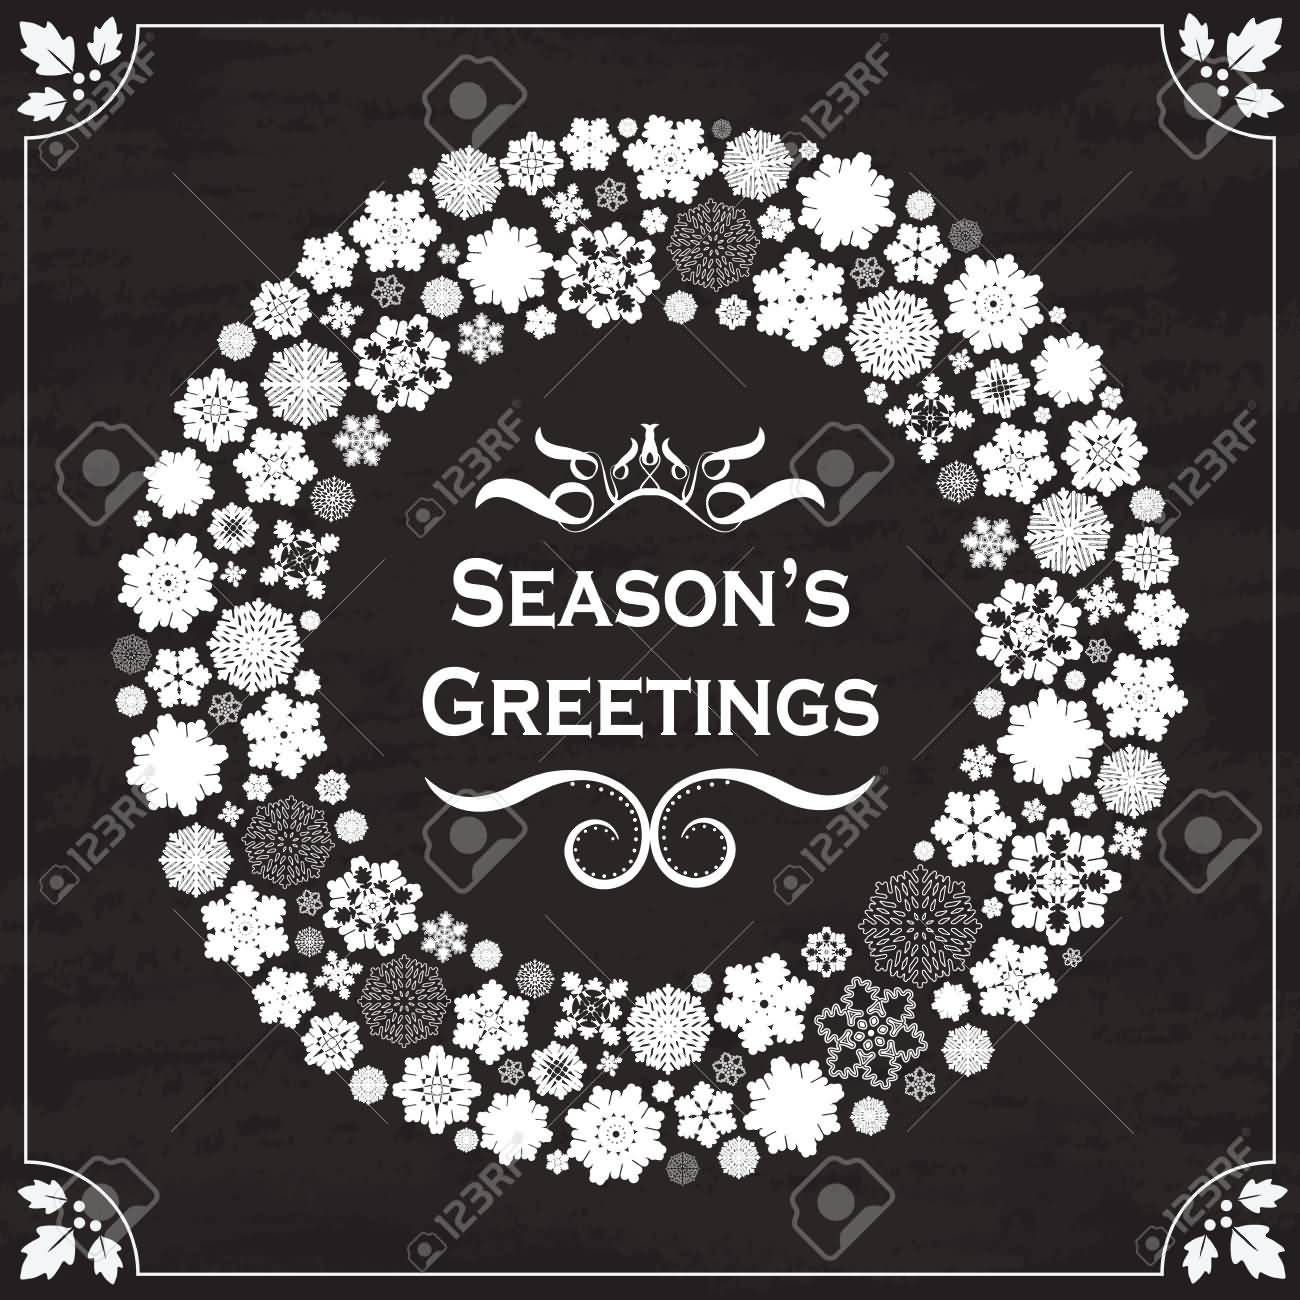 Season's Greetings Snowflakes Border On Chalkboard